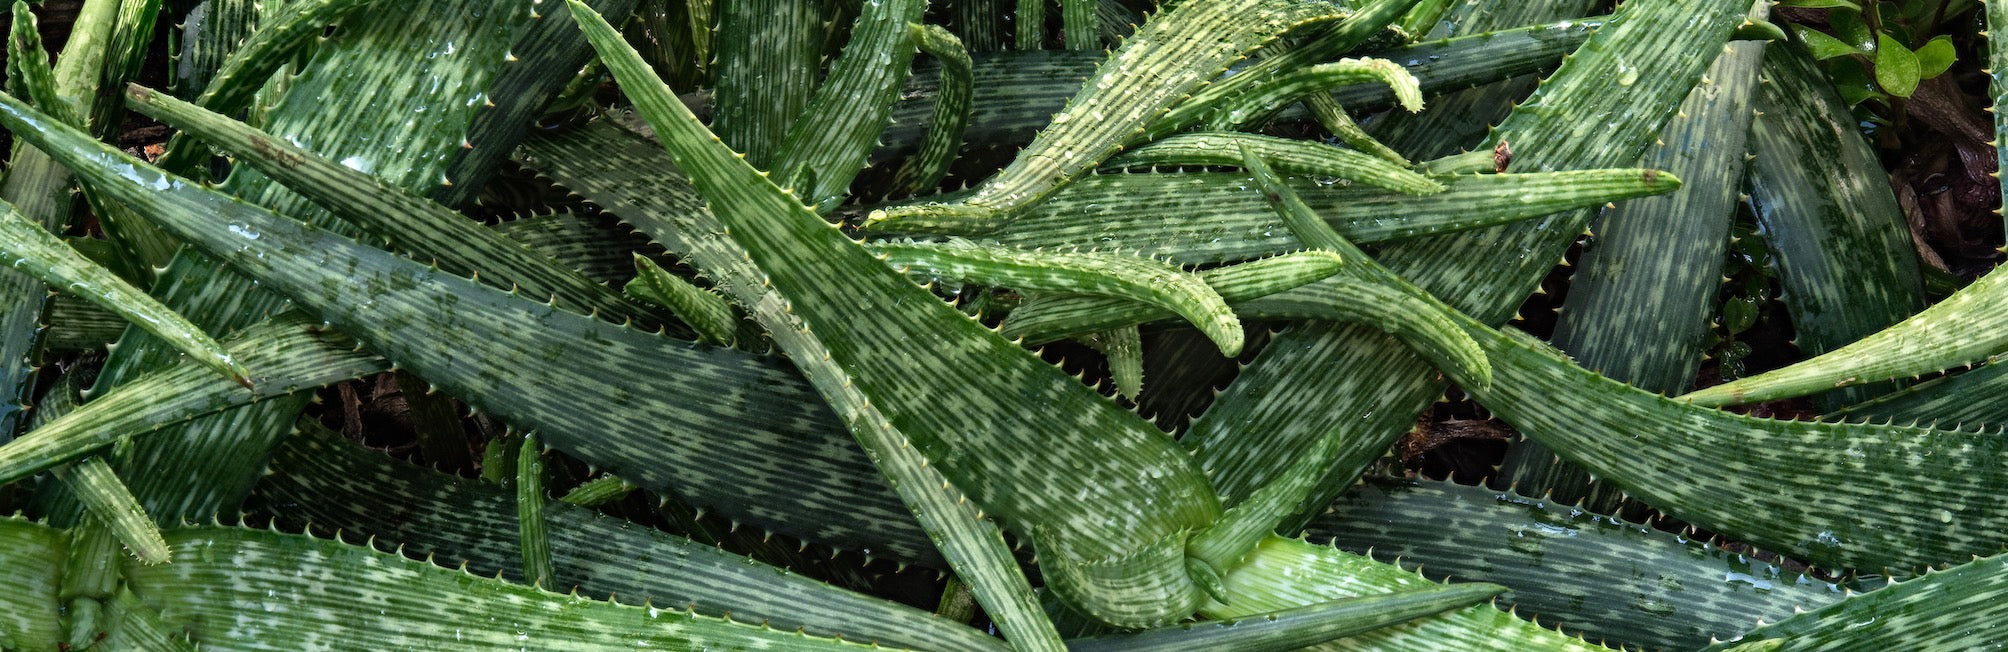 Aloe Vera, Non-decolorized Whole Leaf Extract